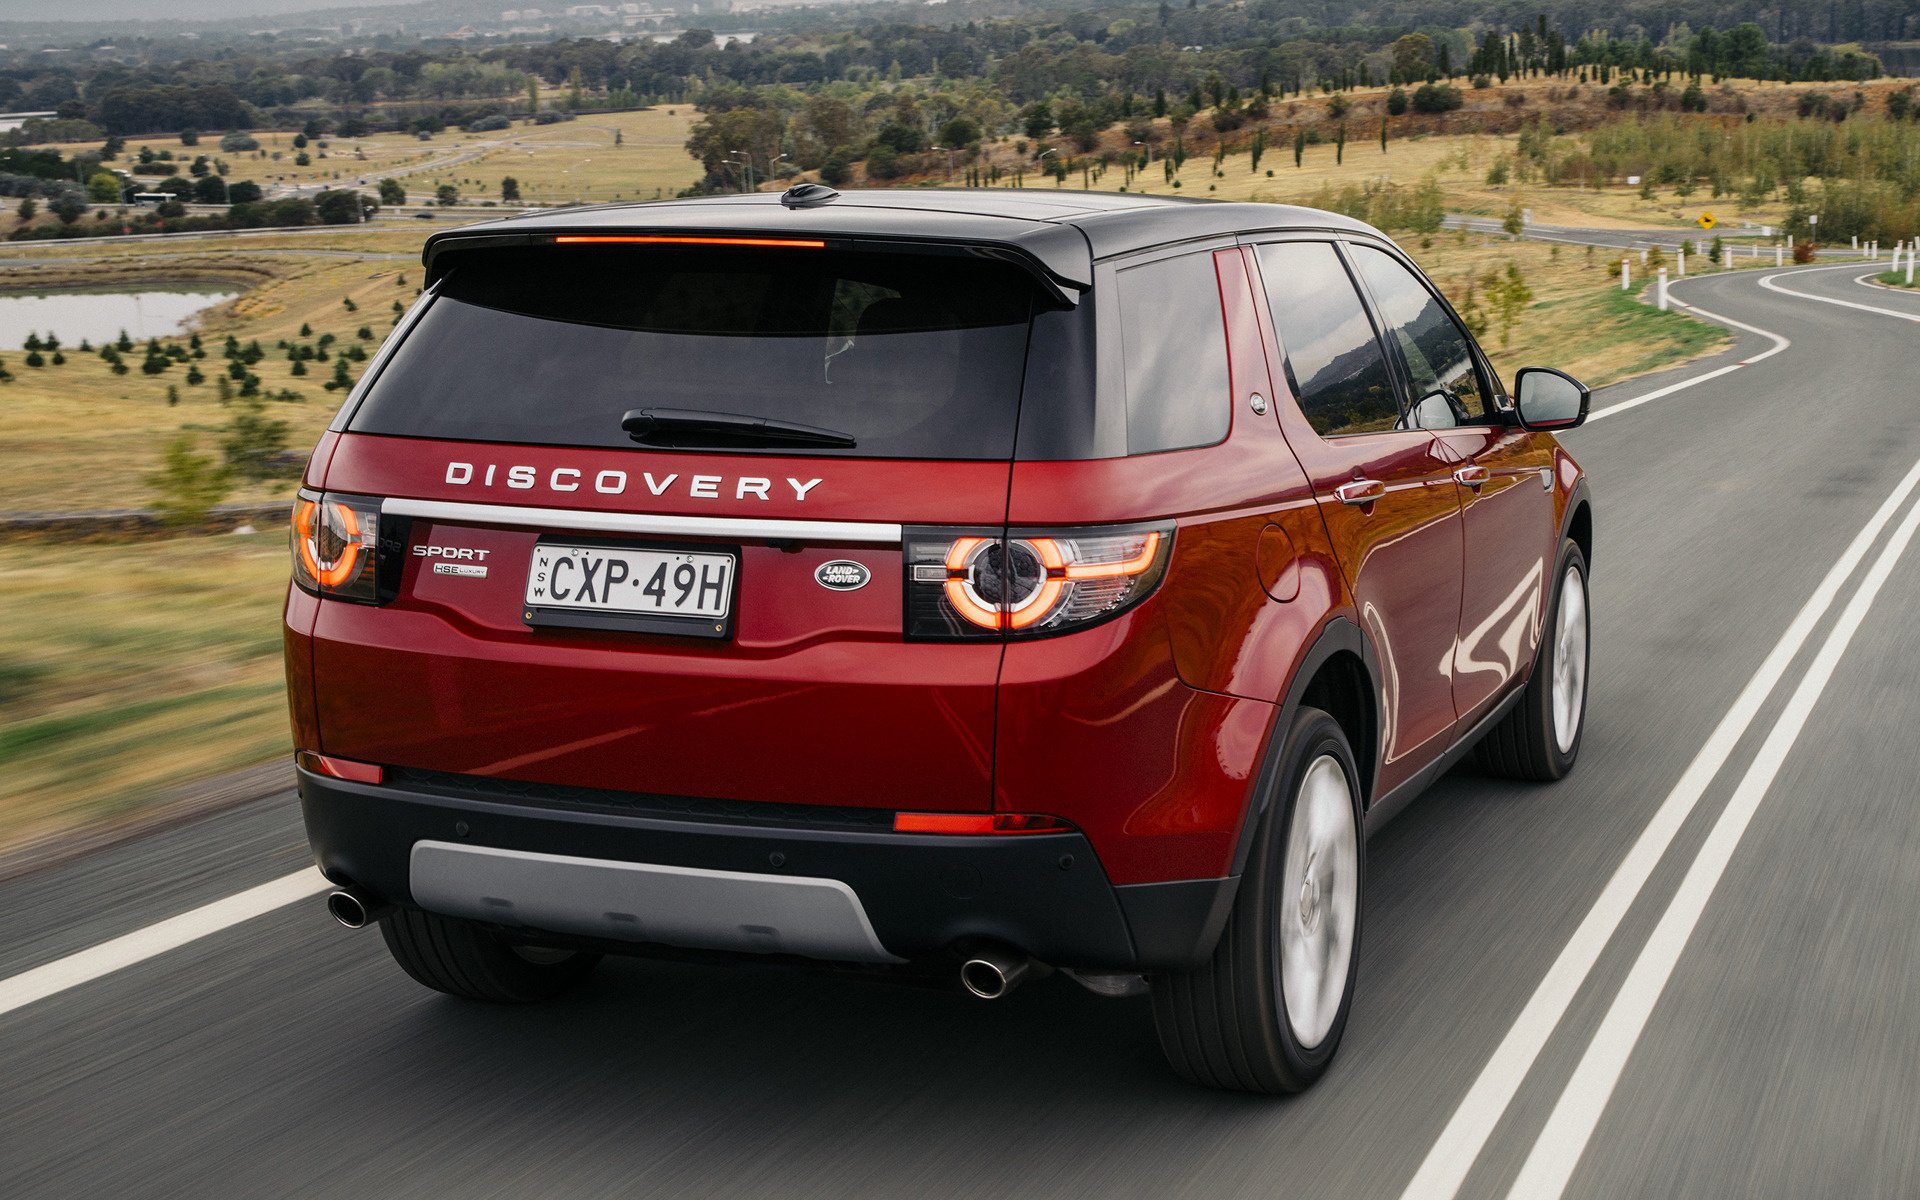 Купить новый дискавери. Ленд Ровер Дискавери спорт 2015. Land Rover Discovery Sport 2015. Ленд Ровер Дискавери 2015. Range Rover Discovery Sport 2015.